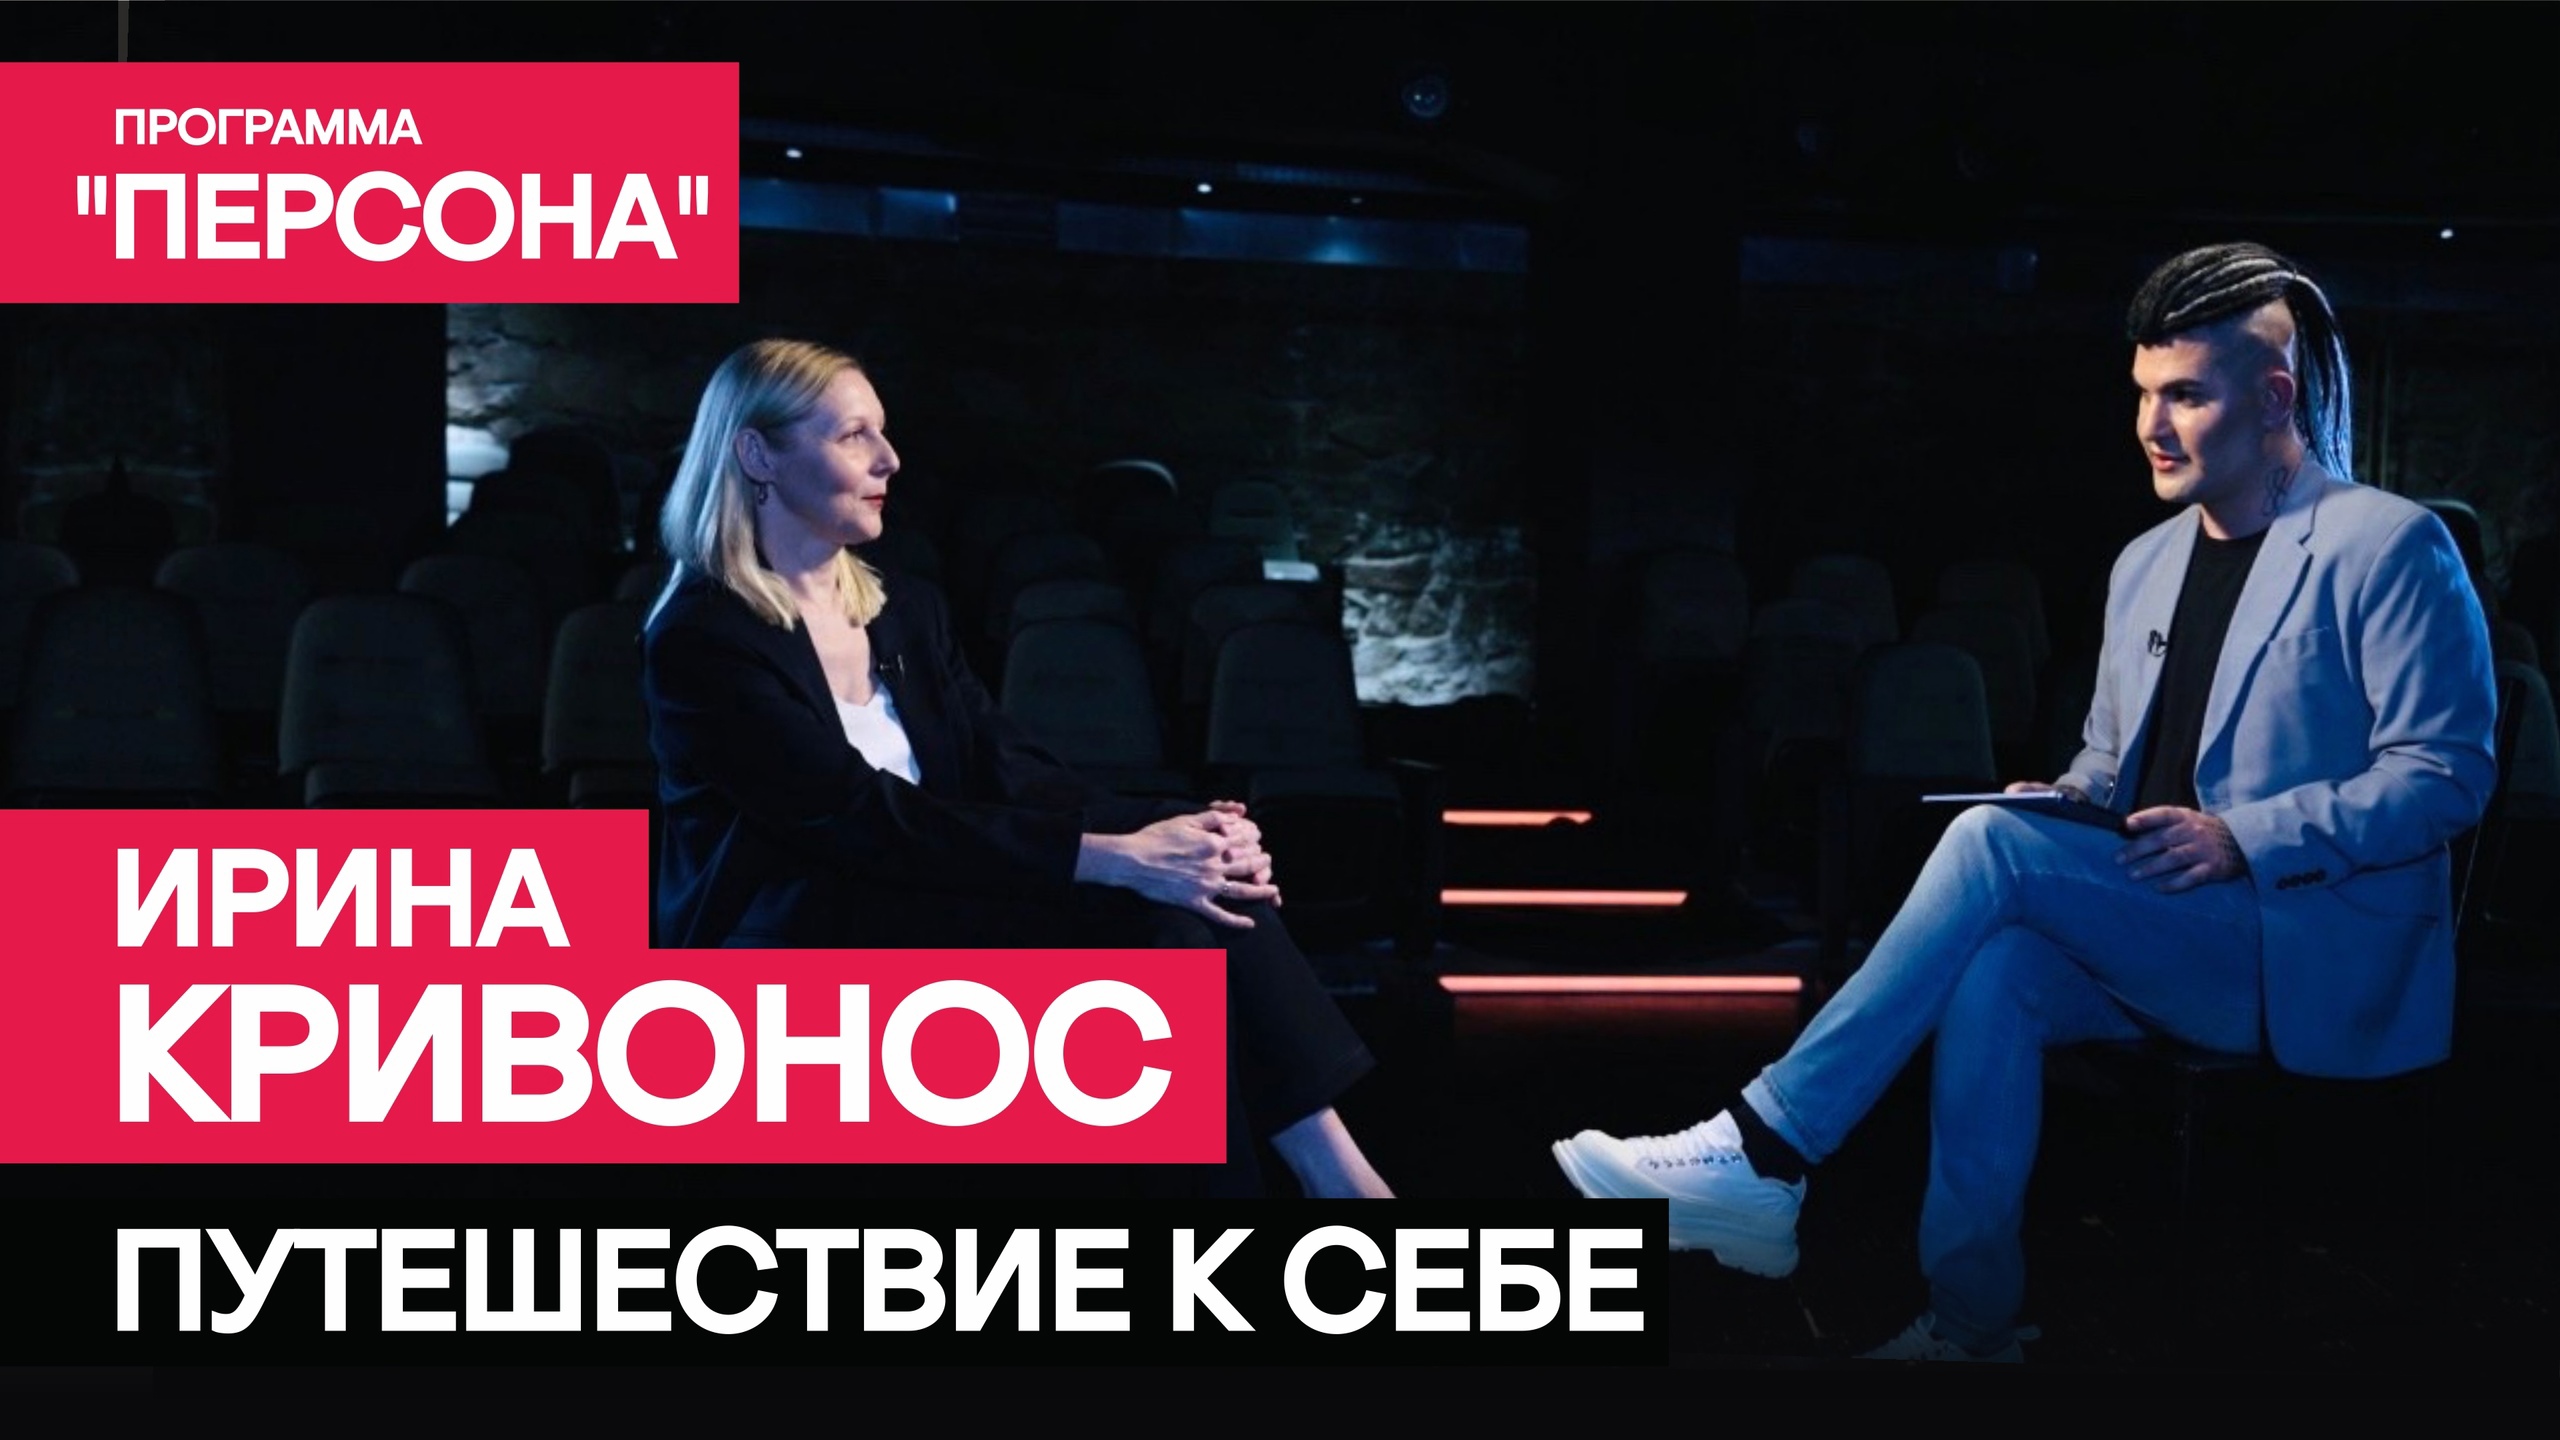 Программа "Персона" |ПУТЕШЕСТВИЕ К СЕБЕ| Актриса театра и кино Ирина Кривонос.